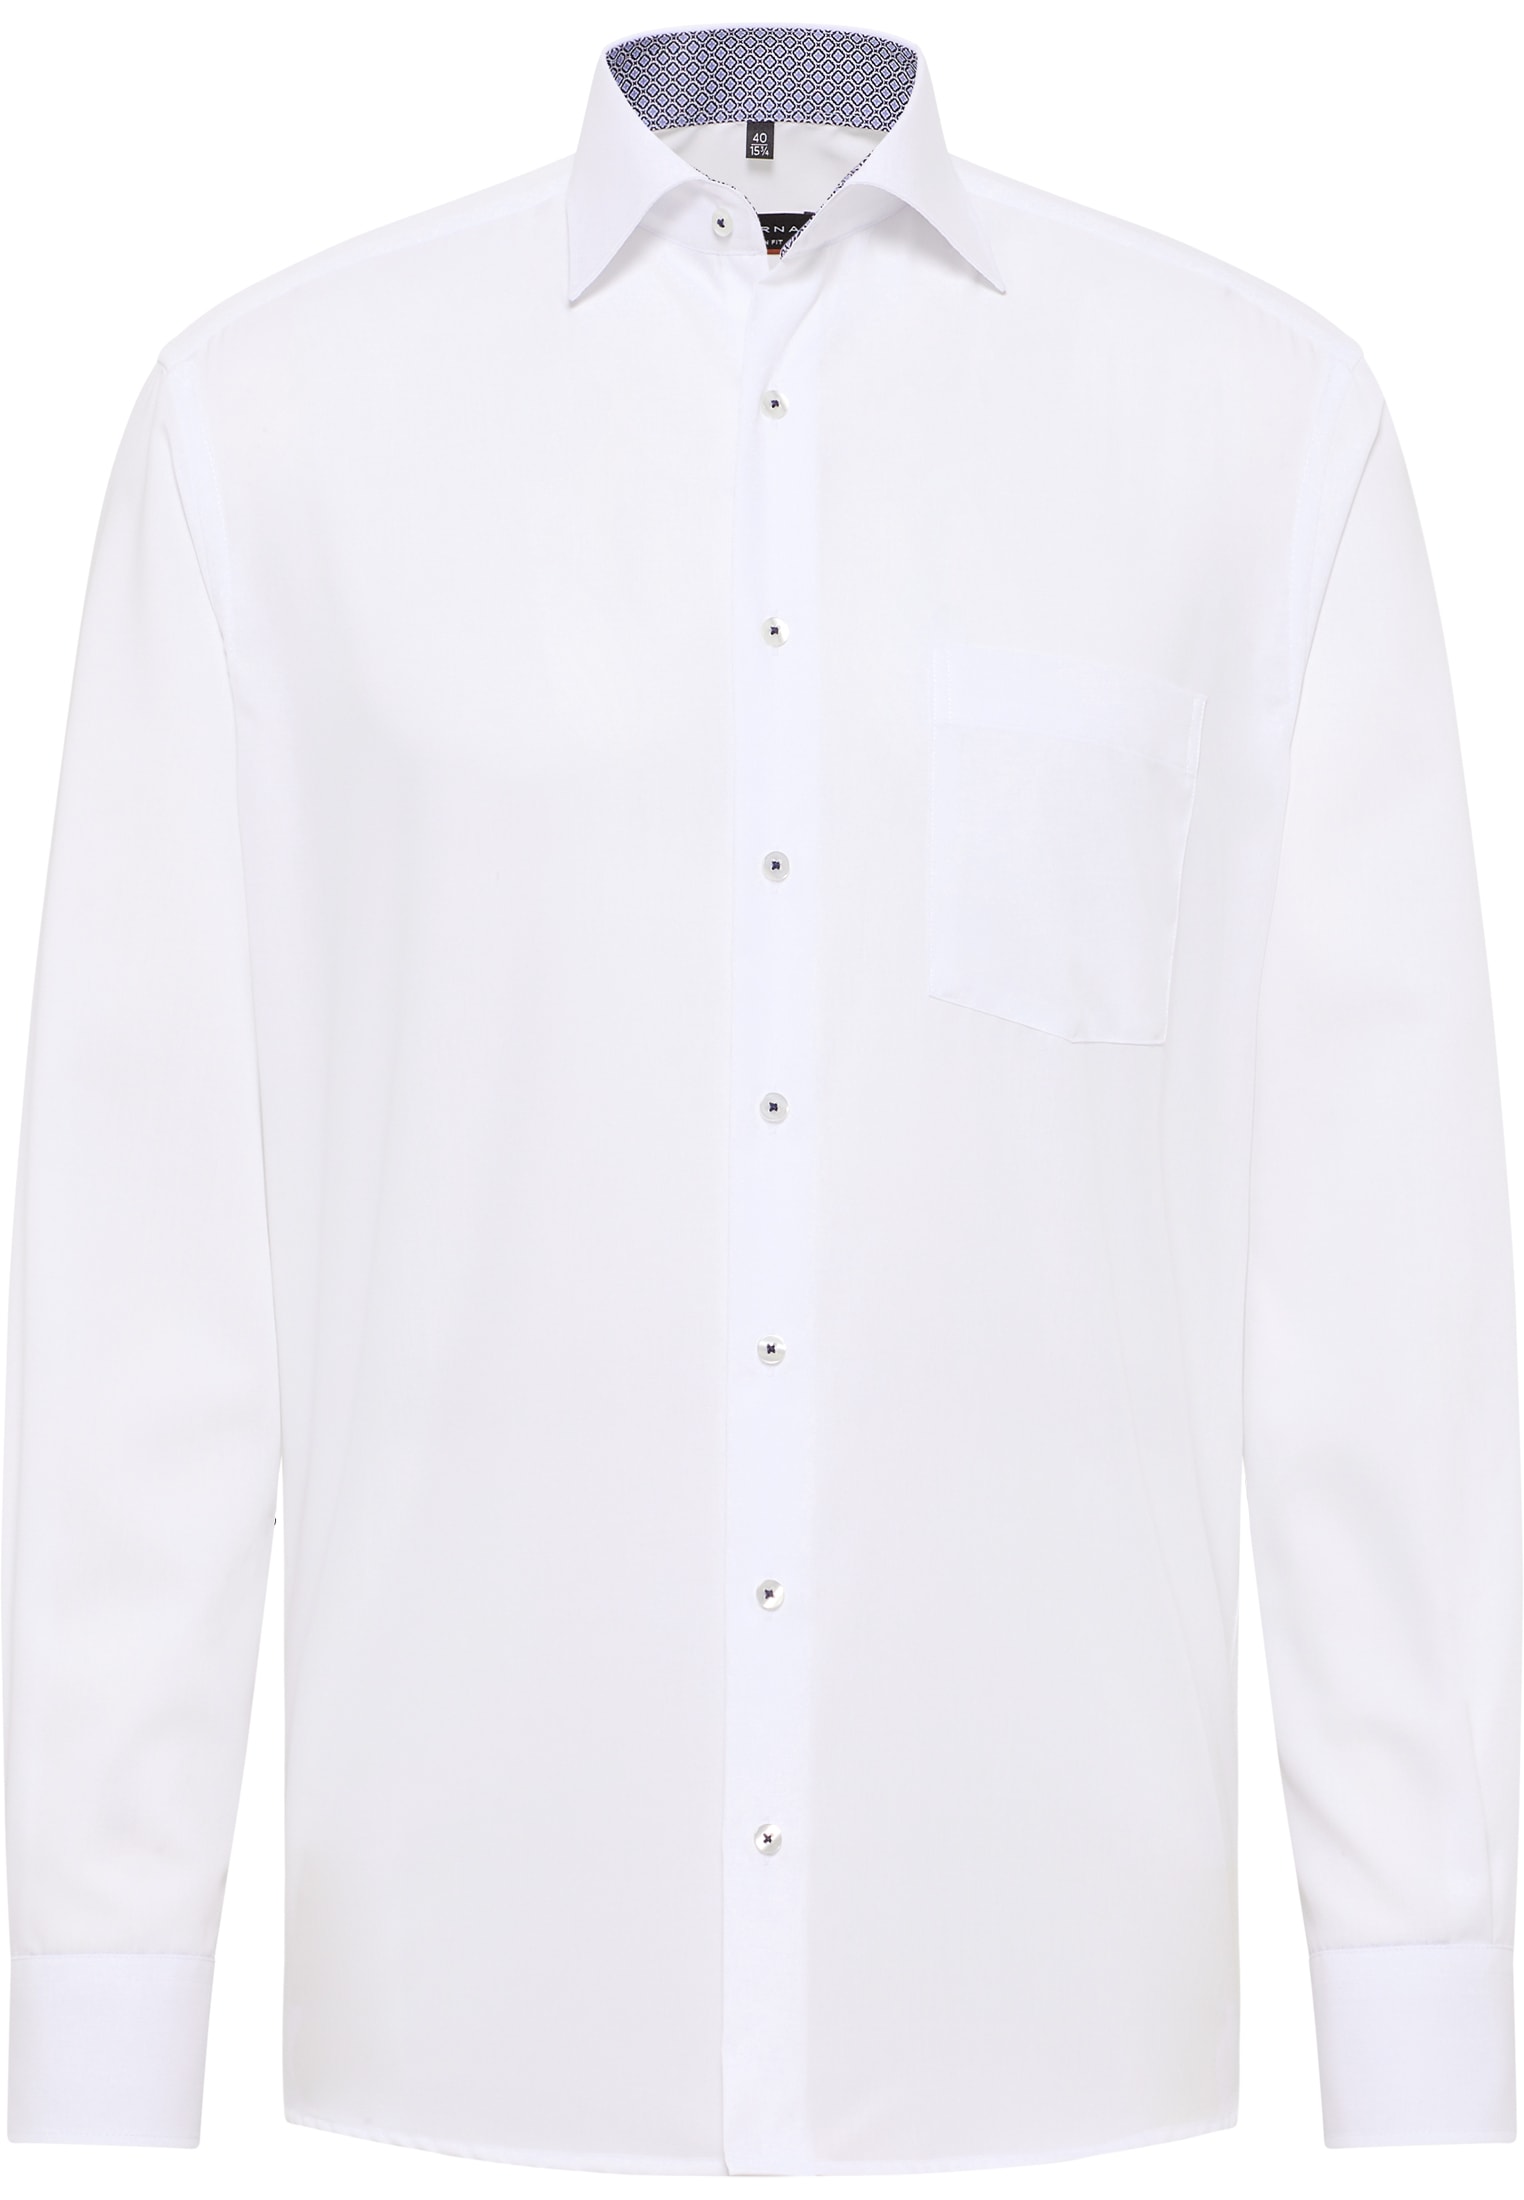 MODERN FIT Shirt in white plain